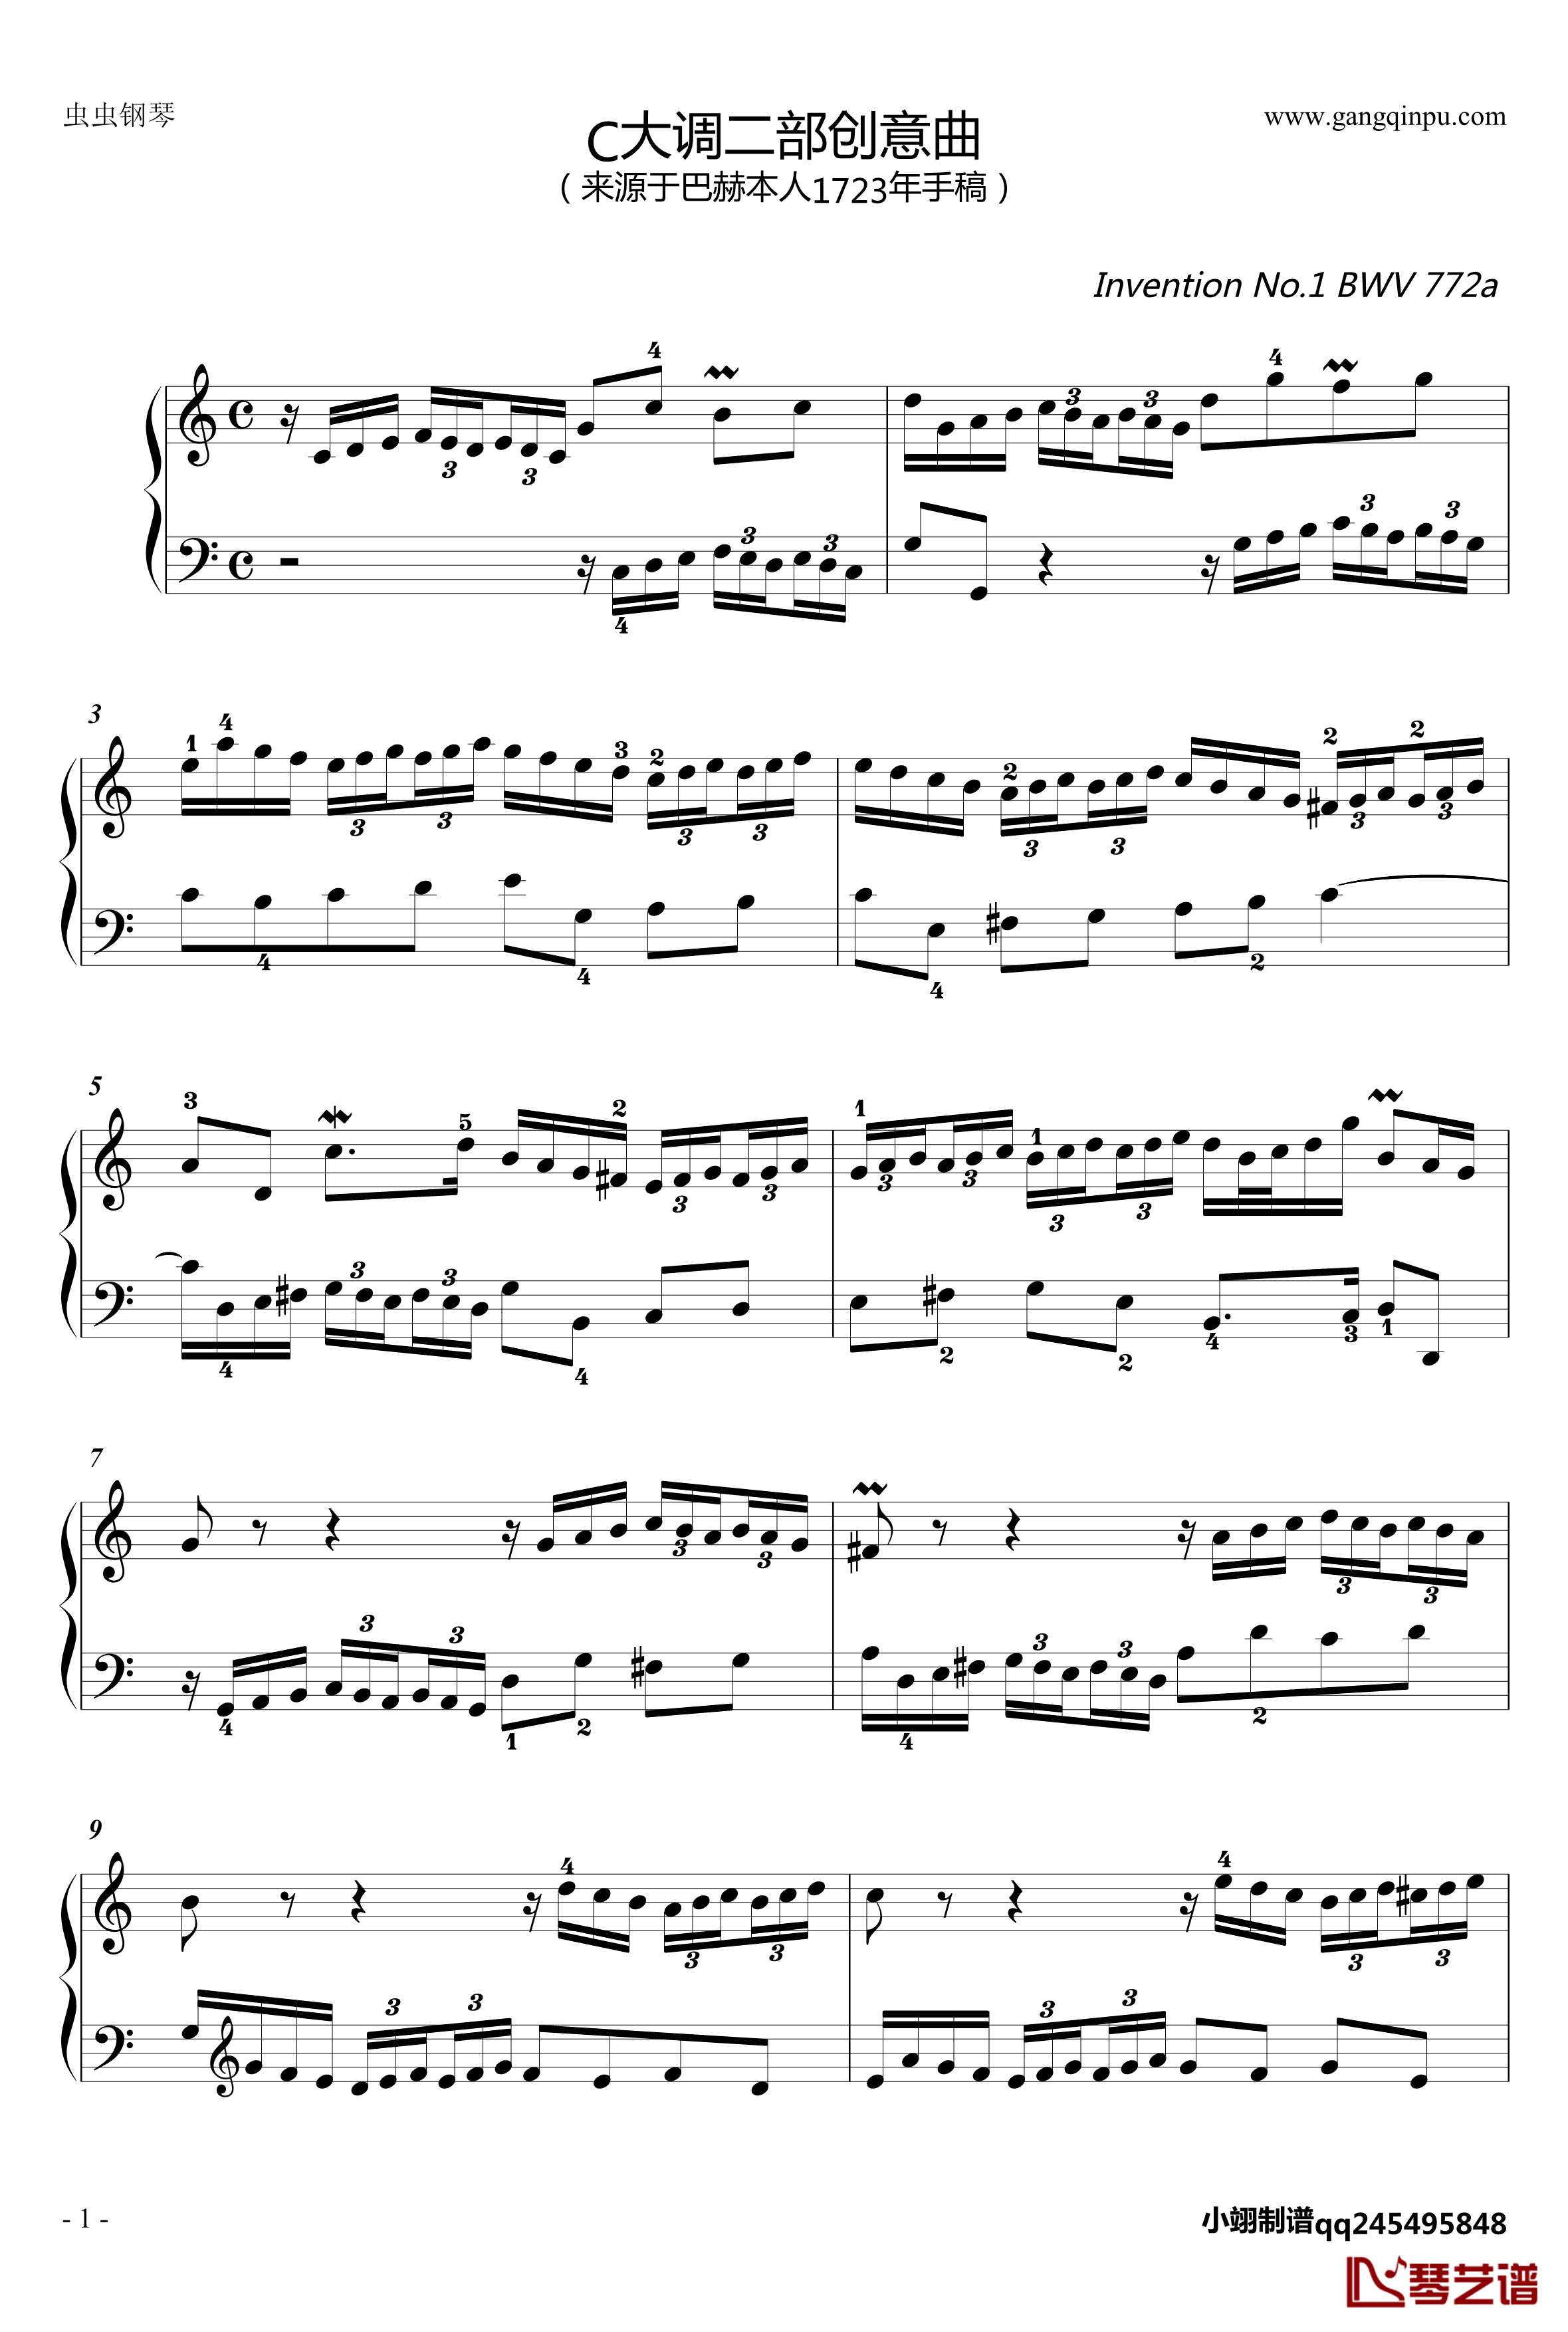 C大调二部创意曲钢琴谱-1723年手稿版-巴哈-Bach, Johann Sebastian1